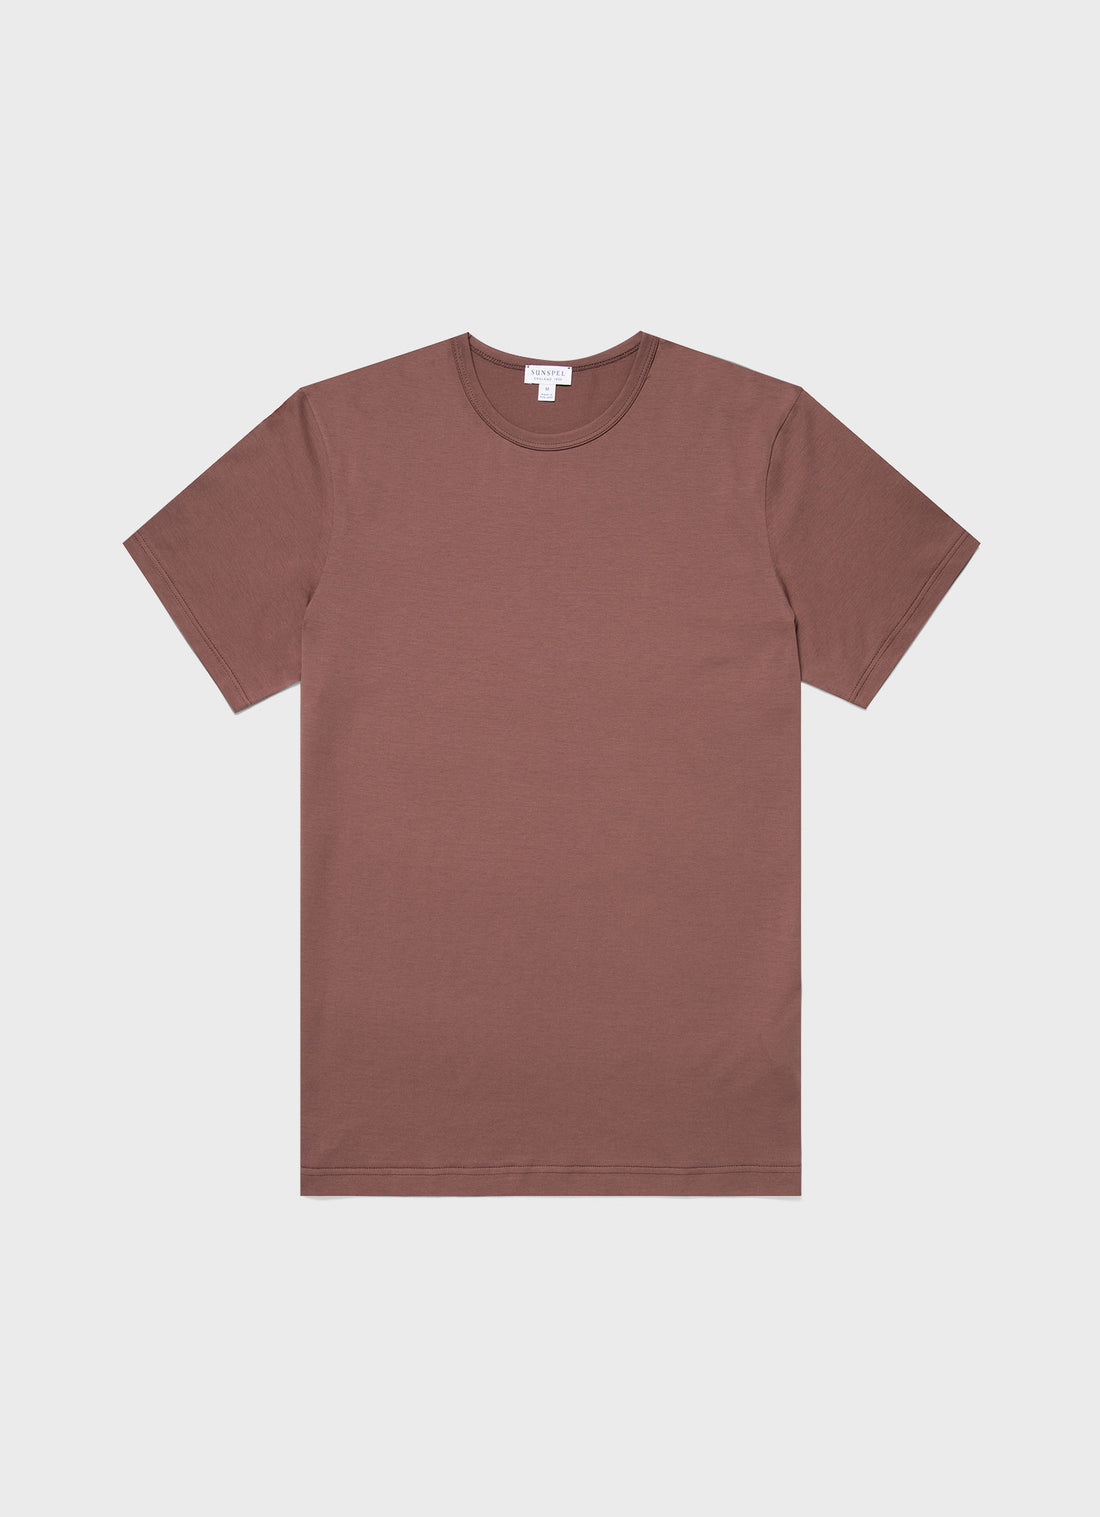 Men's Classic T-shirt in Brown